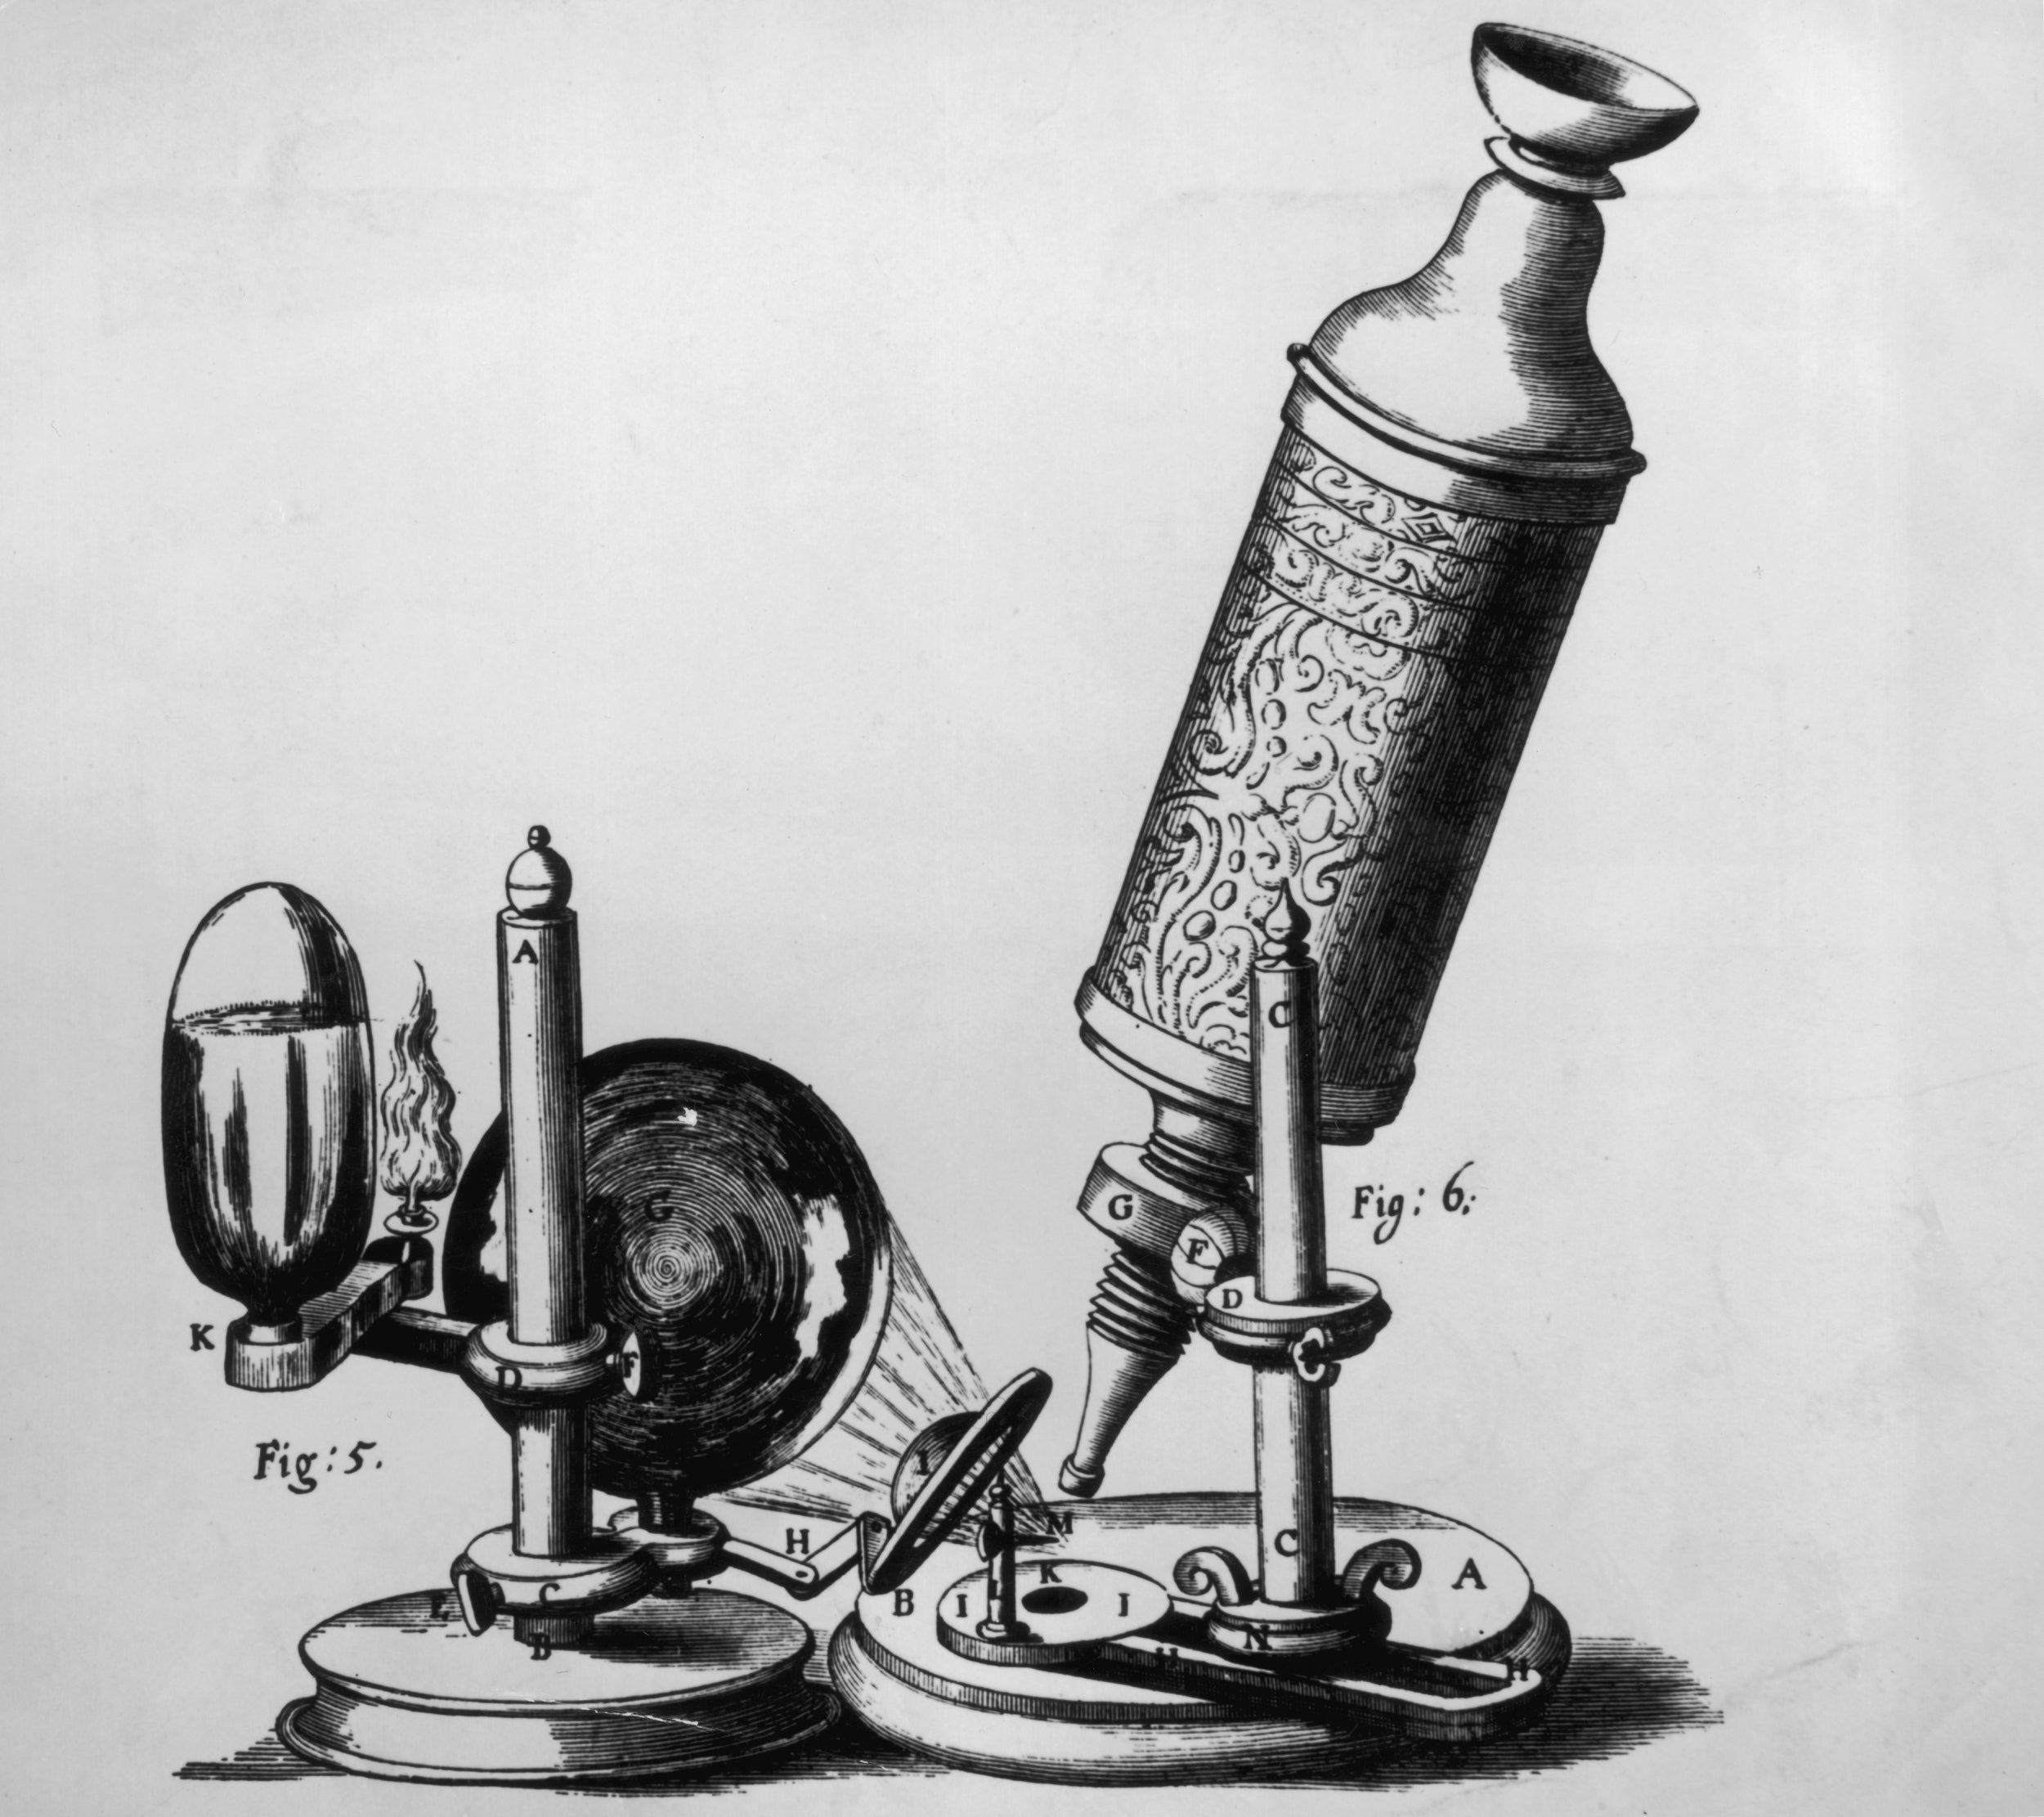 An early microscope designed by Robert Hooke,1665